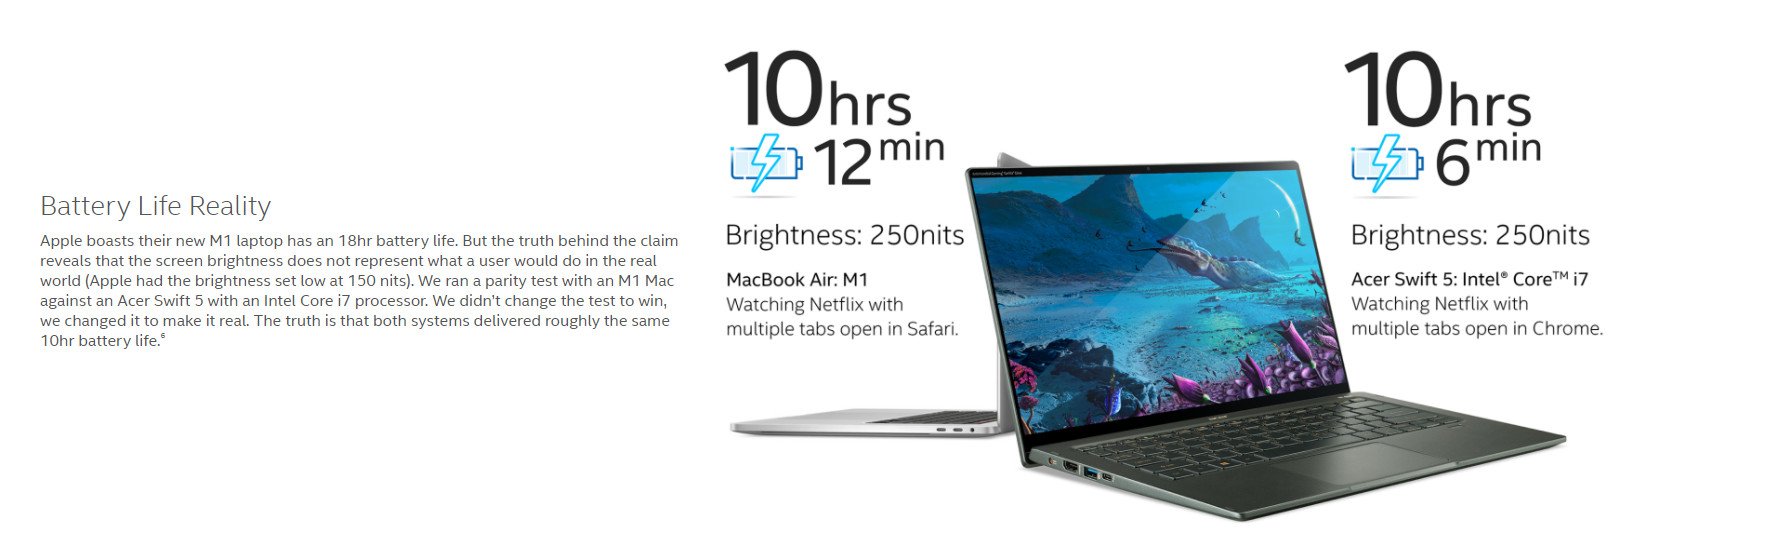 Macbook Vs Acer Battery Life